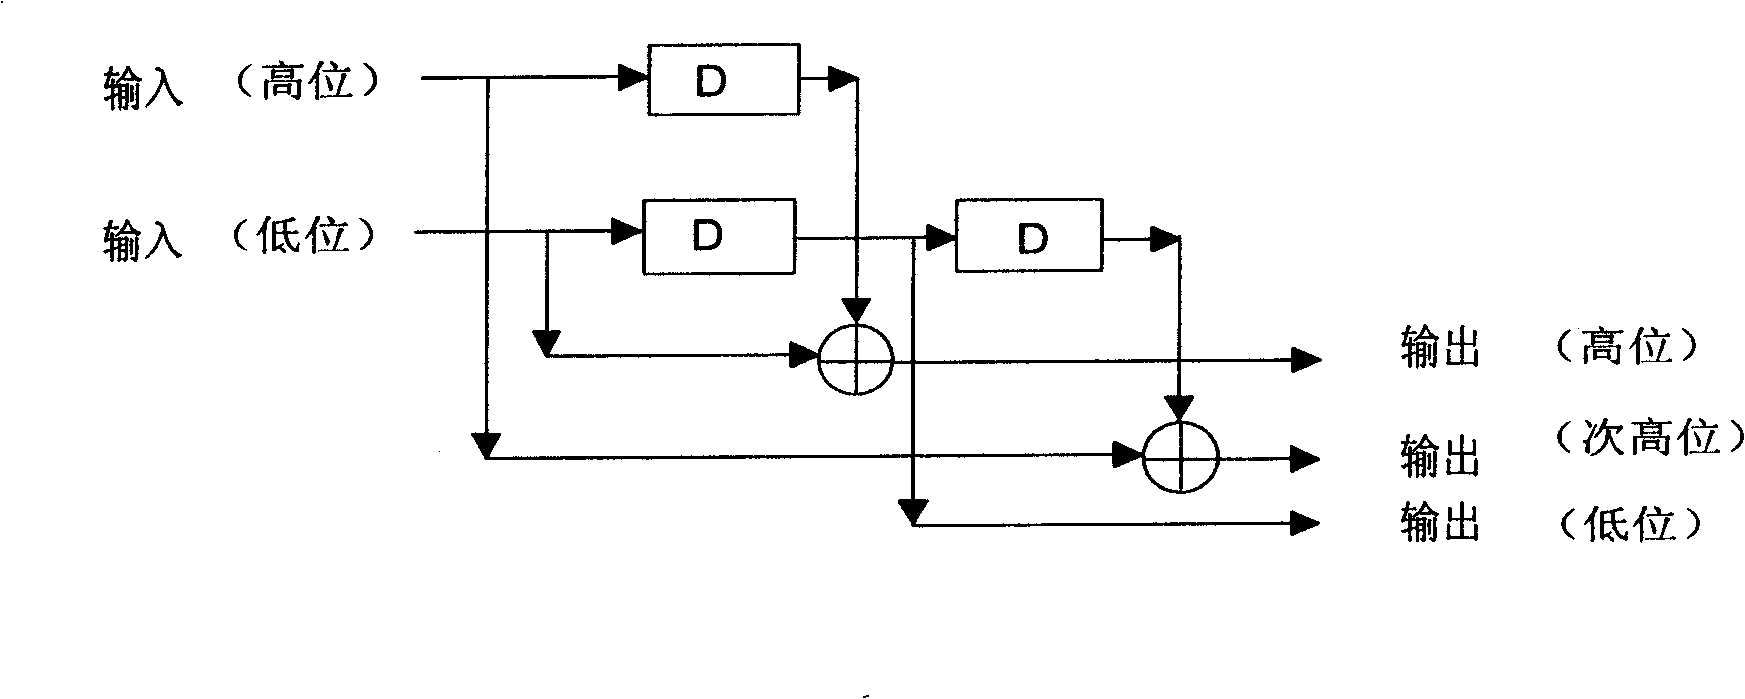 Lattice code modulation method and multiple users receiver